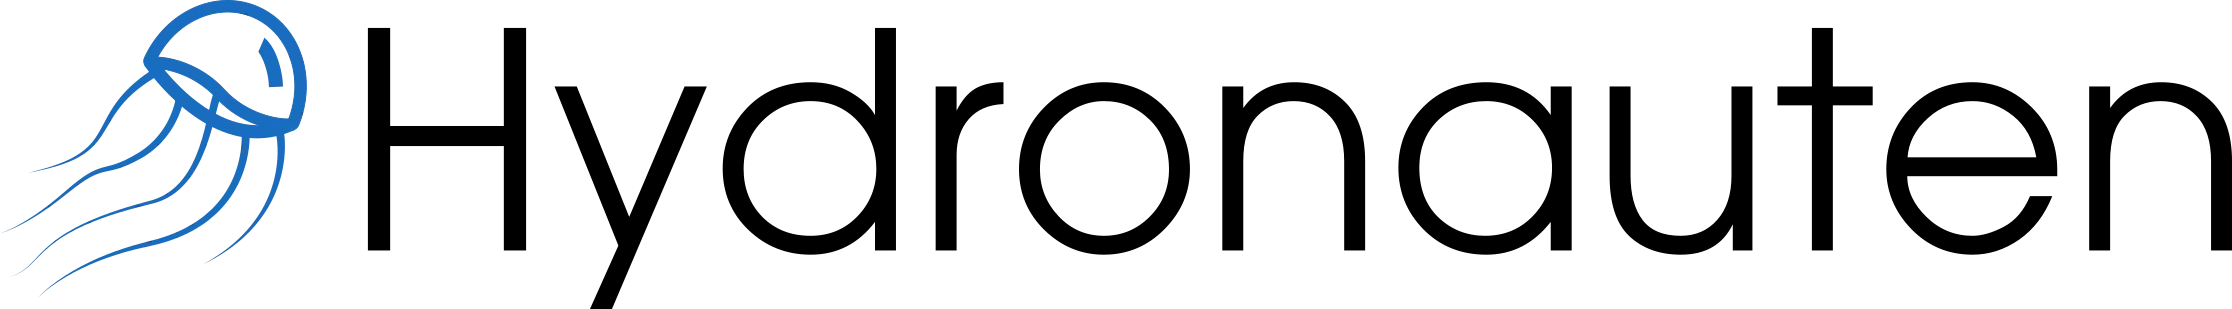 Hydronauten Logo